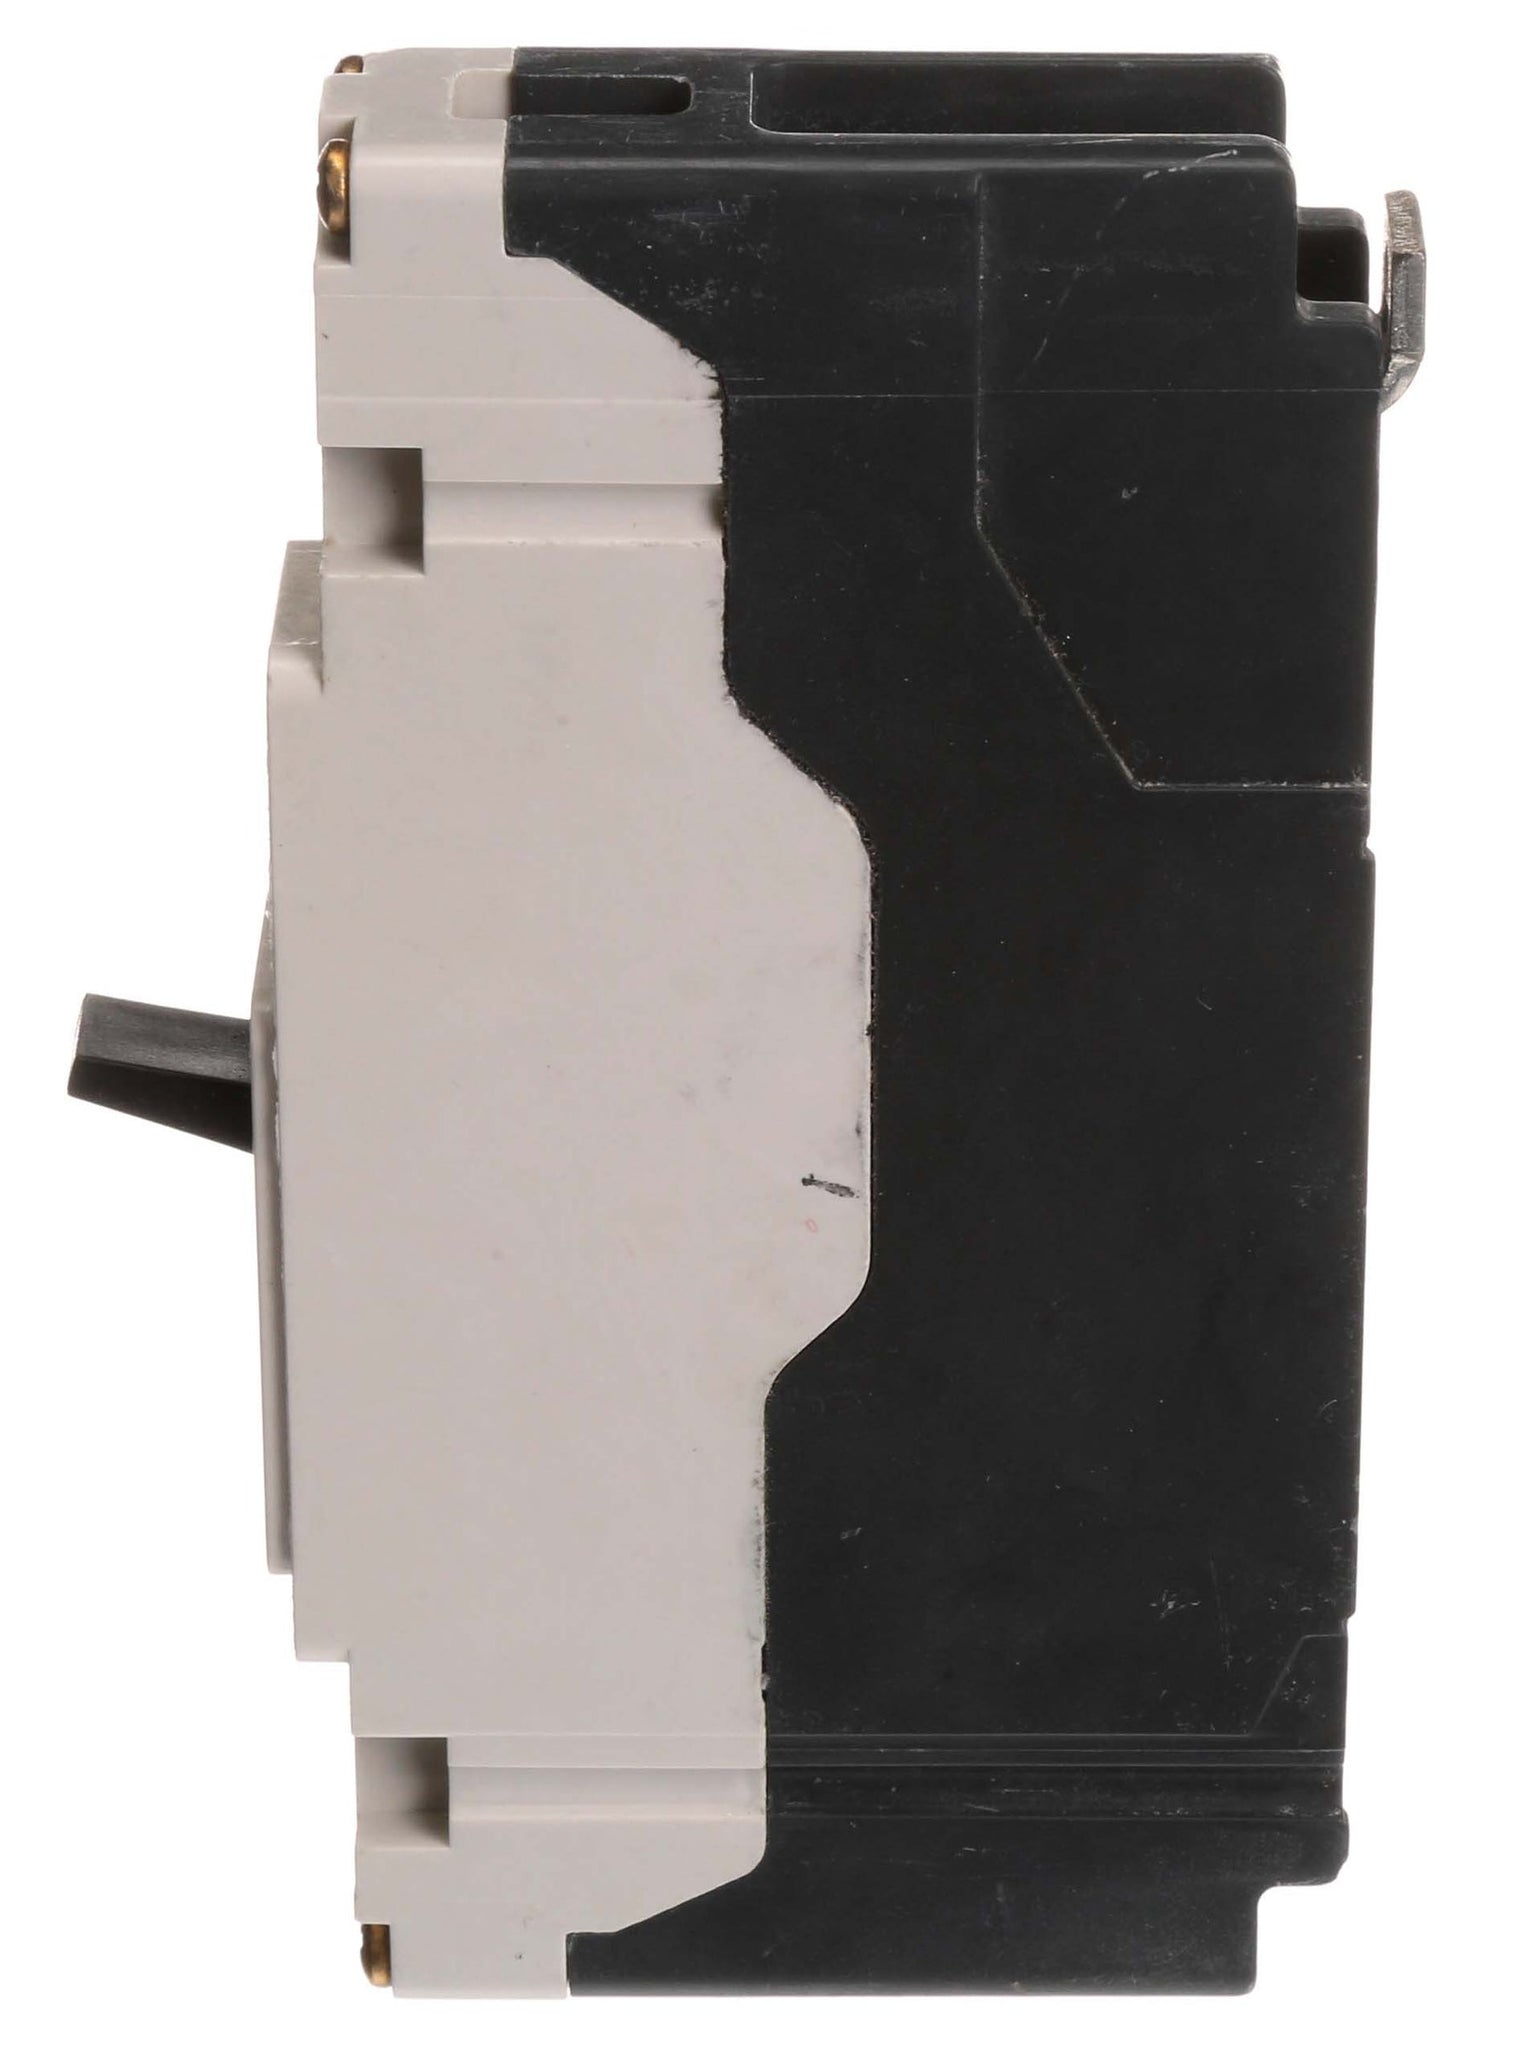 NEB1B025B - Siemens - Molded Case